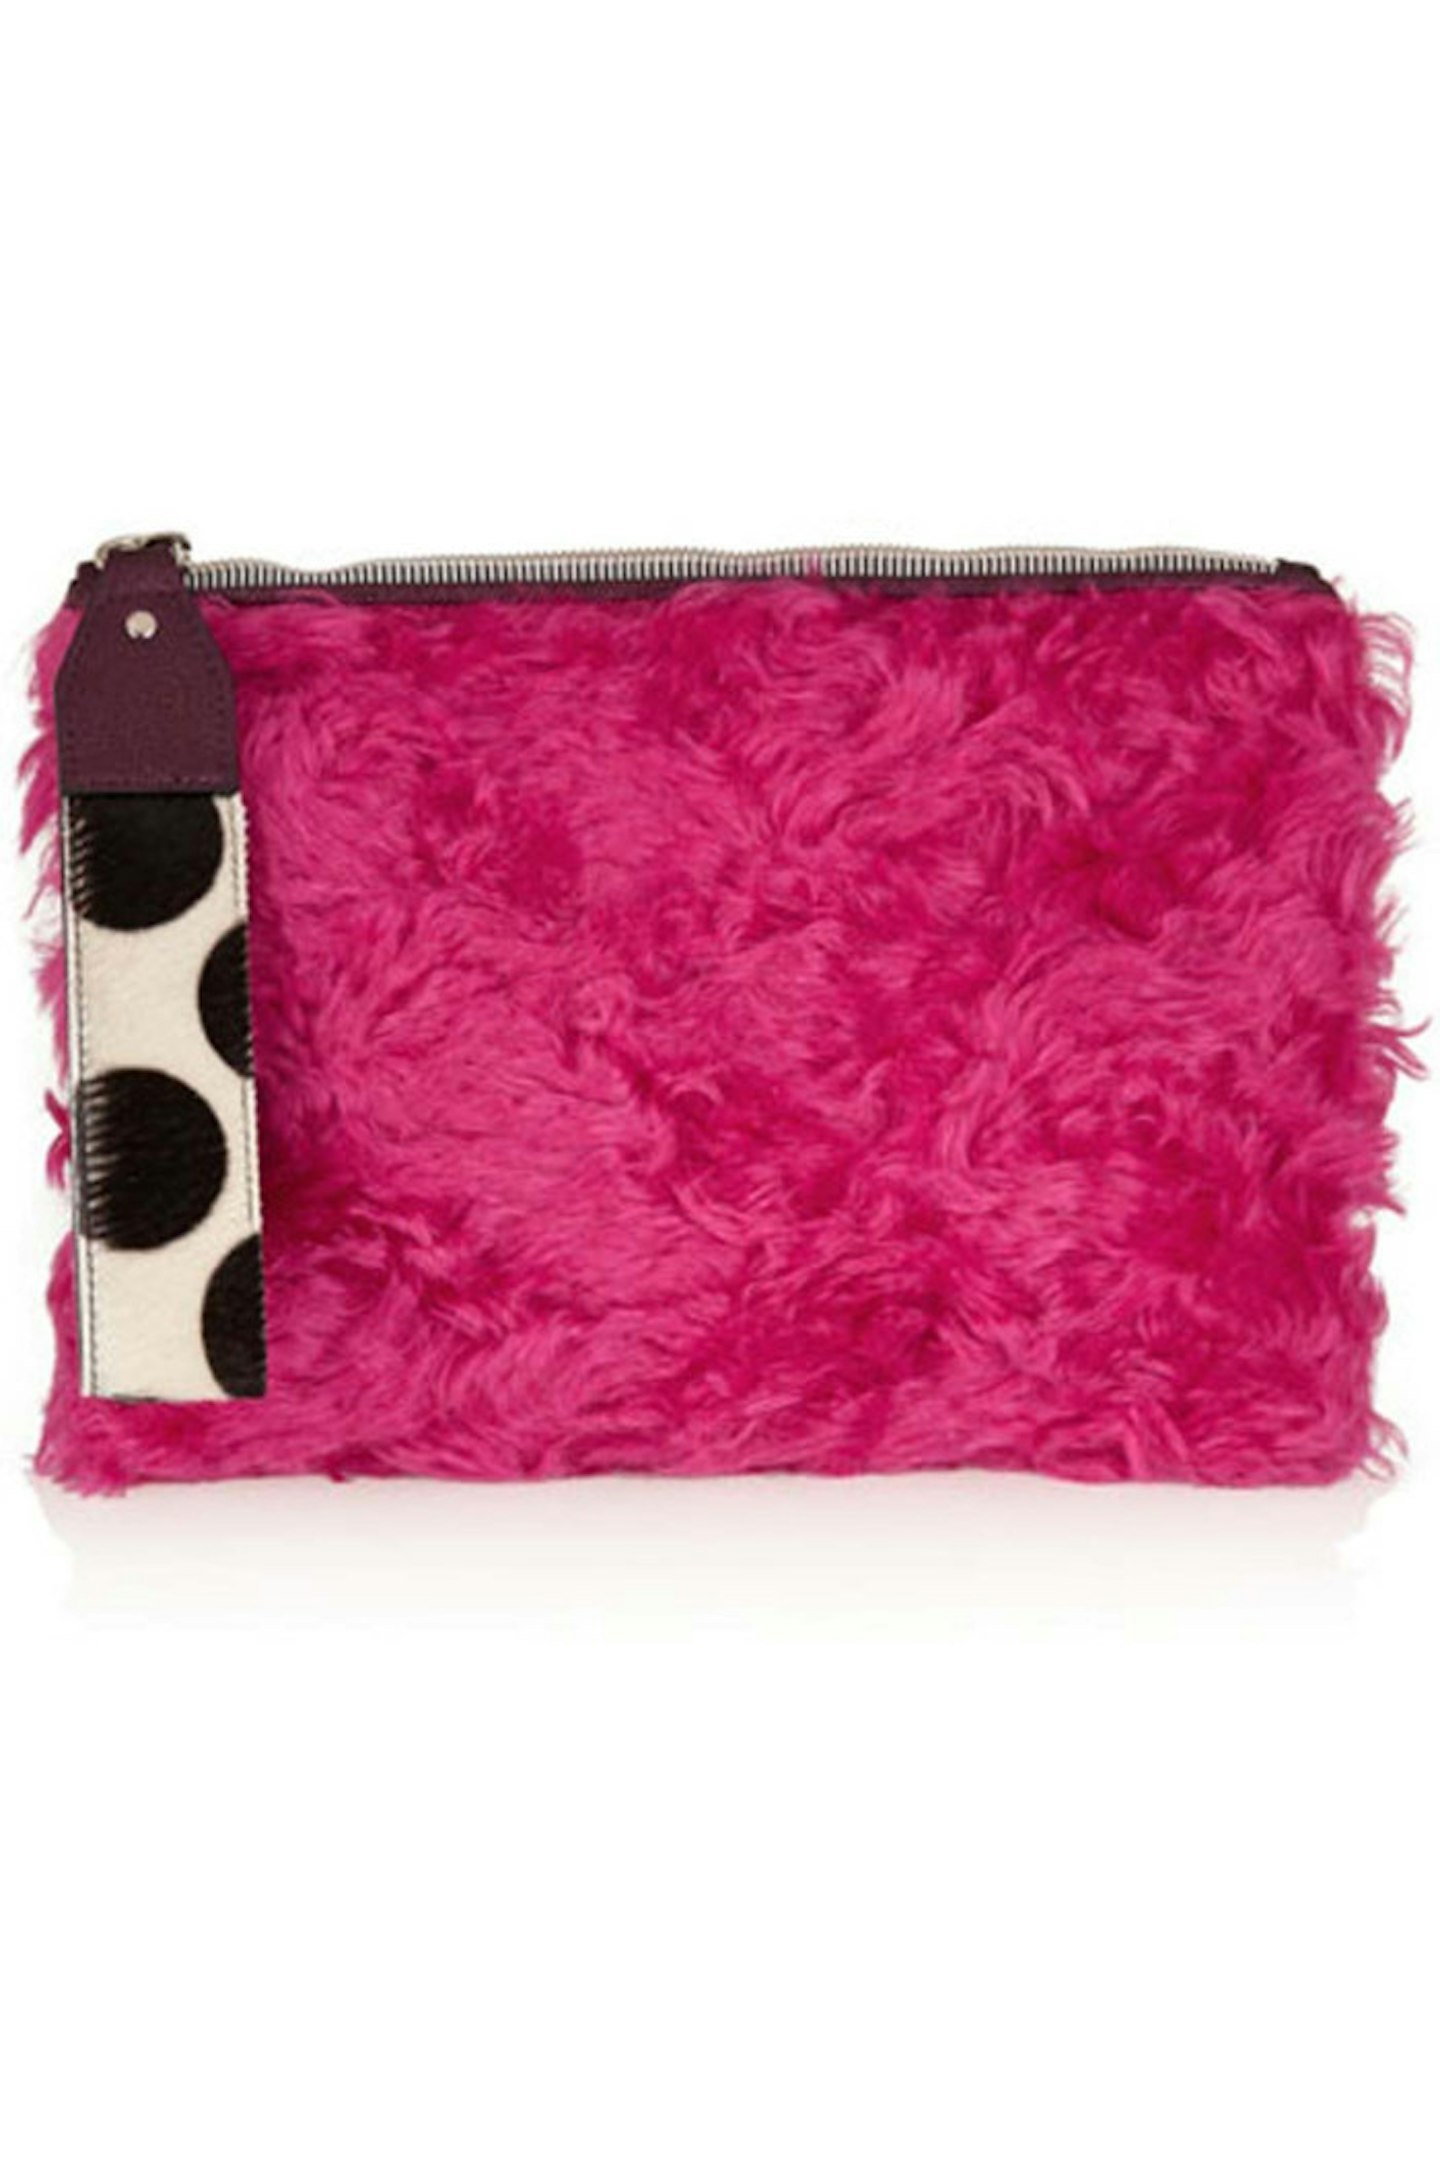 pink clutch, £225, House of Holland at Net-a-porter.com